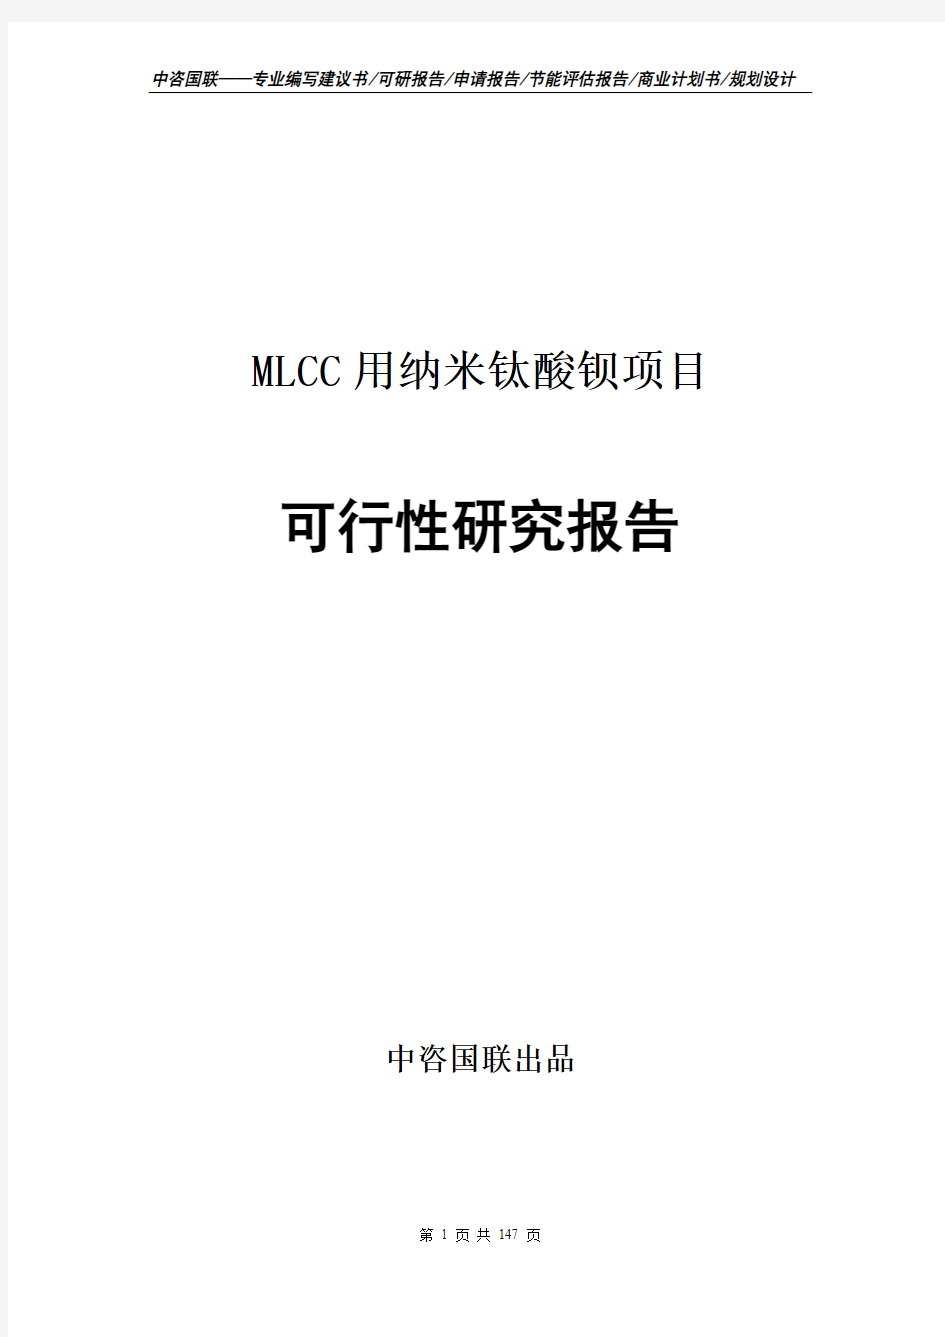 MLCC用纳米钛酸钡项目可行性研究报告